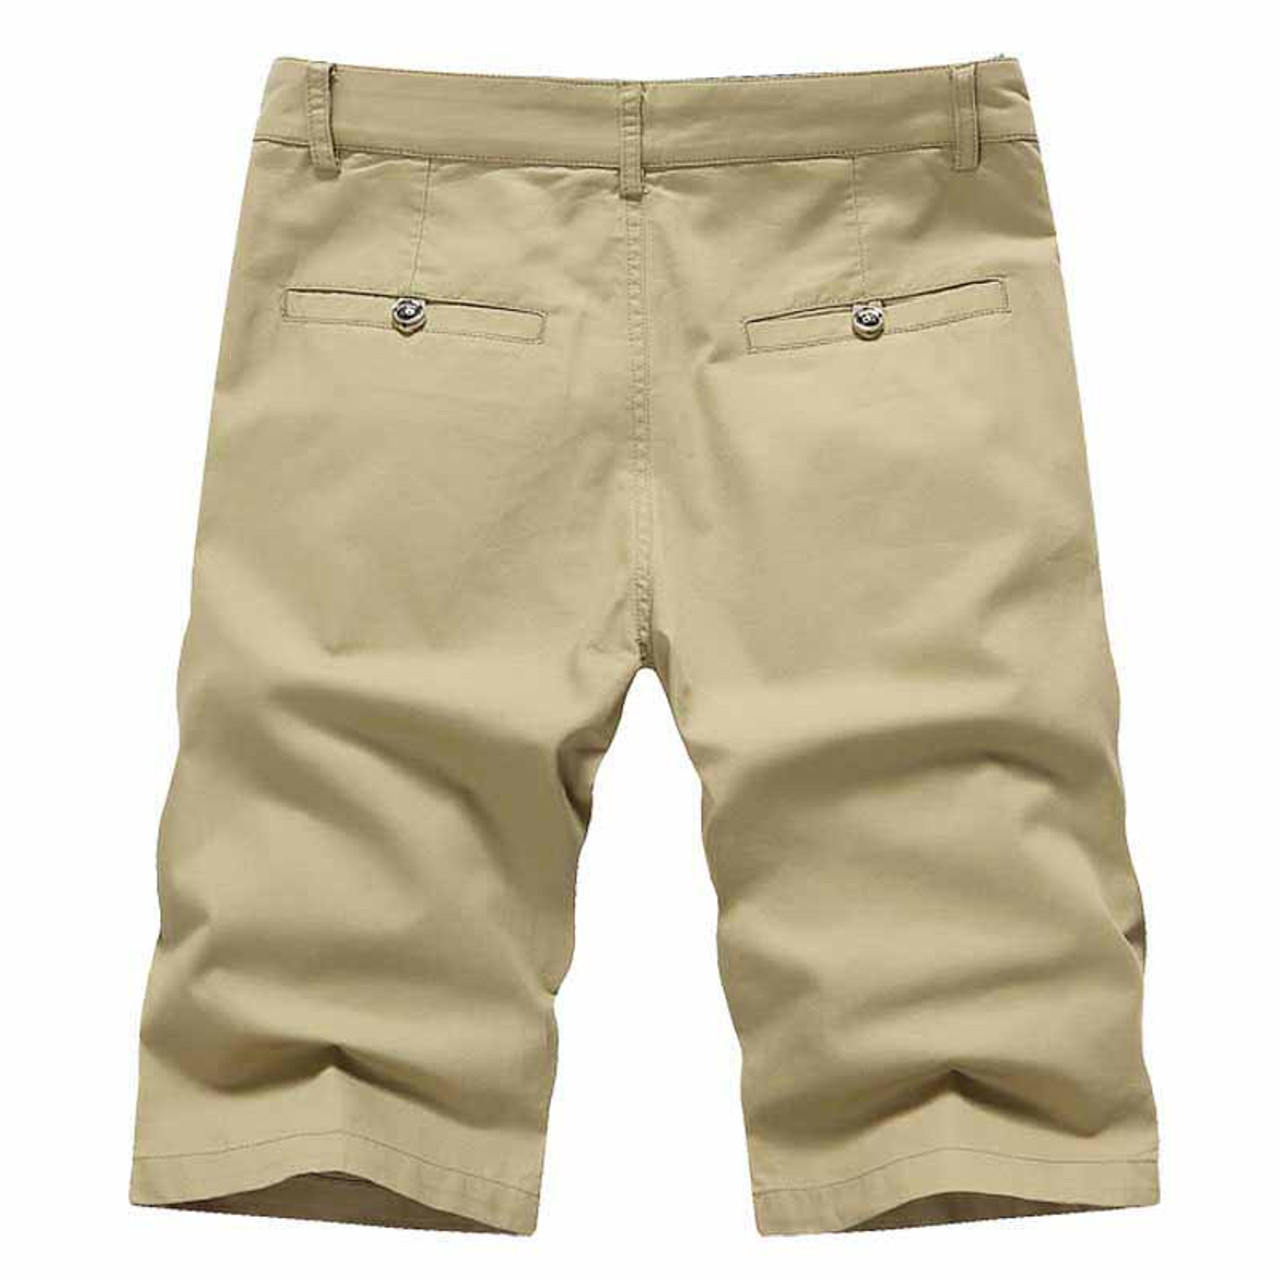 Khaki short casual plain color zip fly | Mens shorts online 1009MP